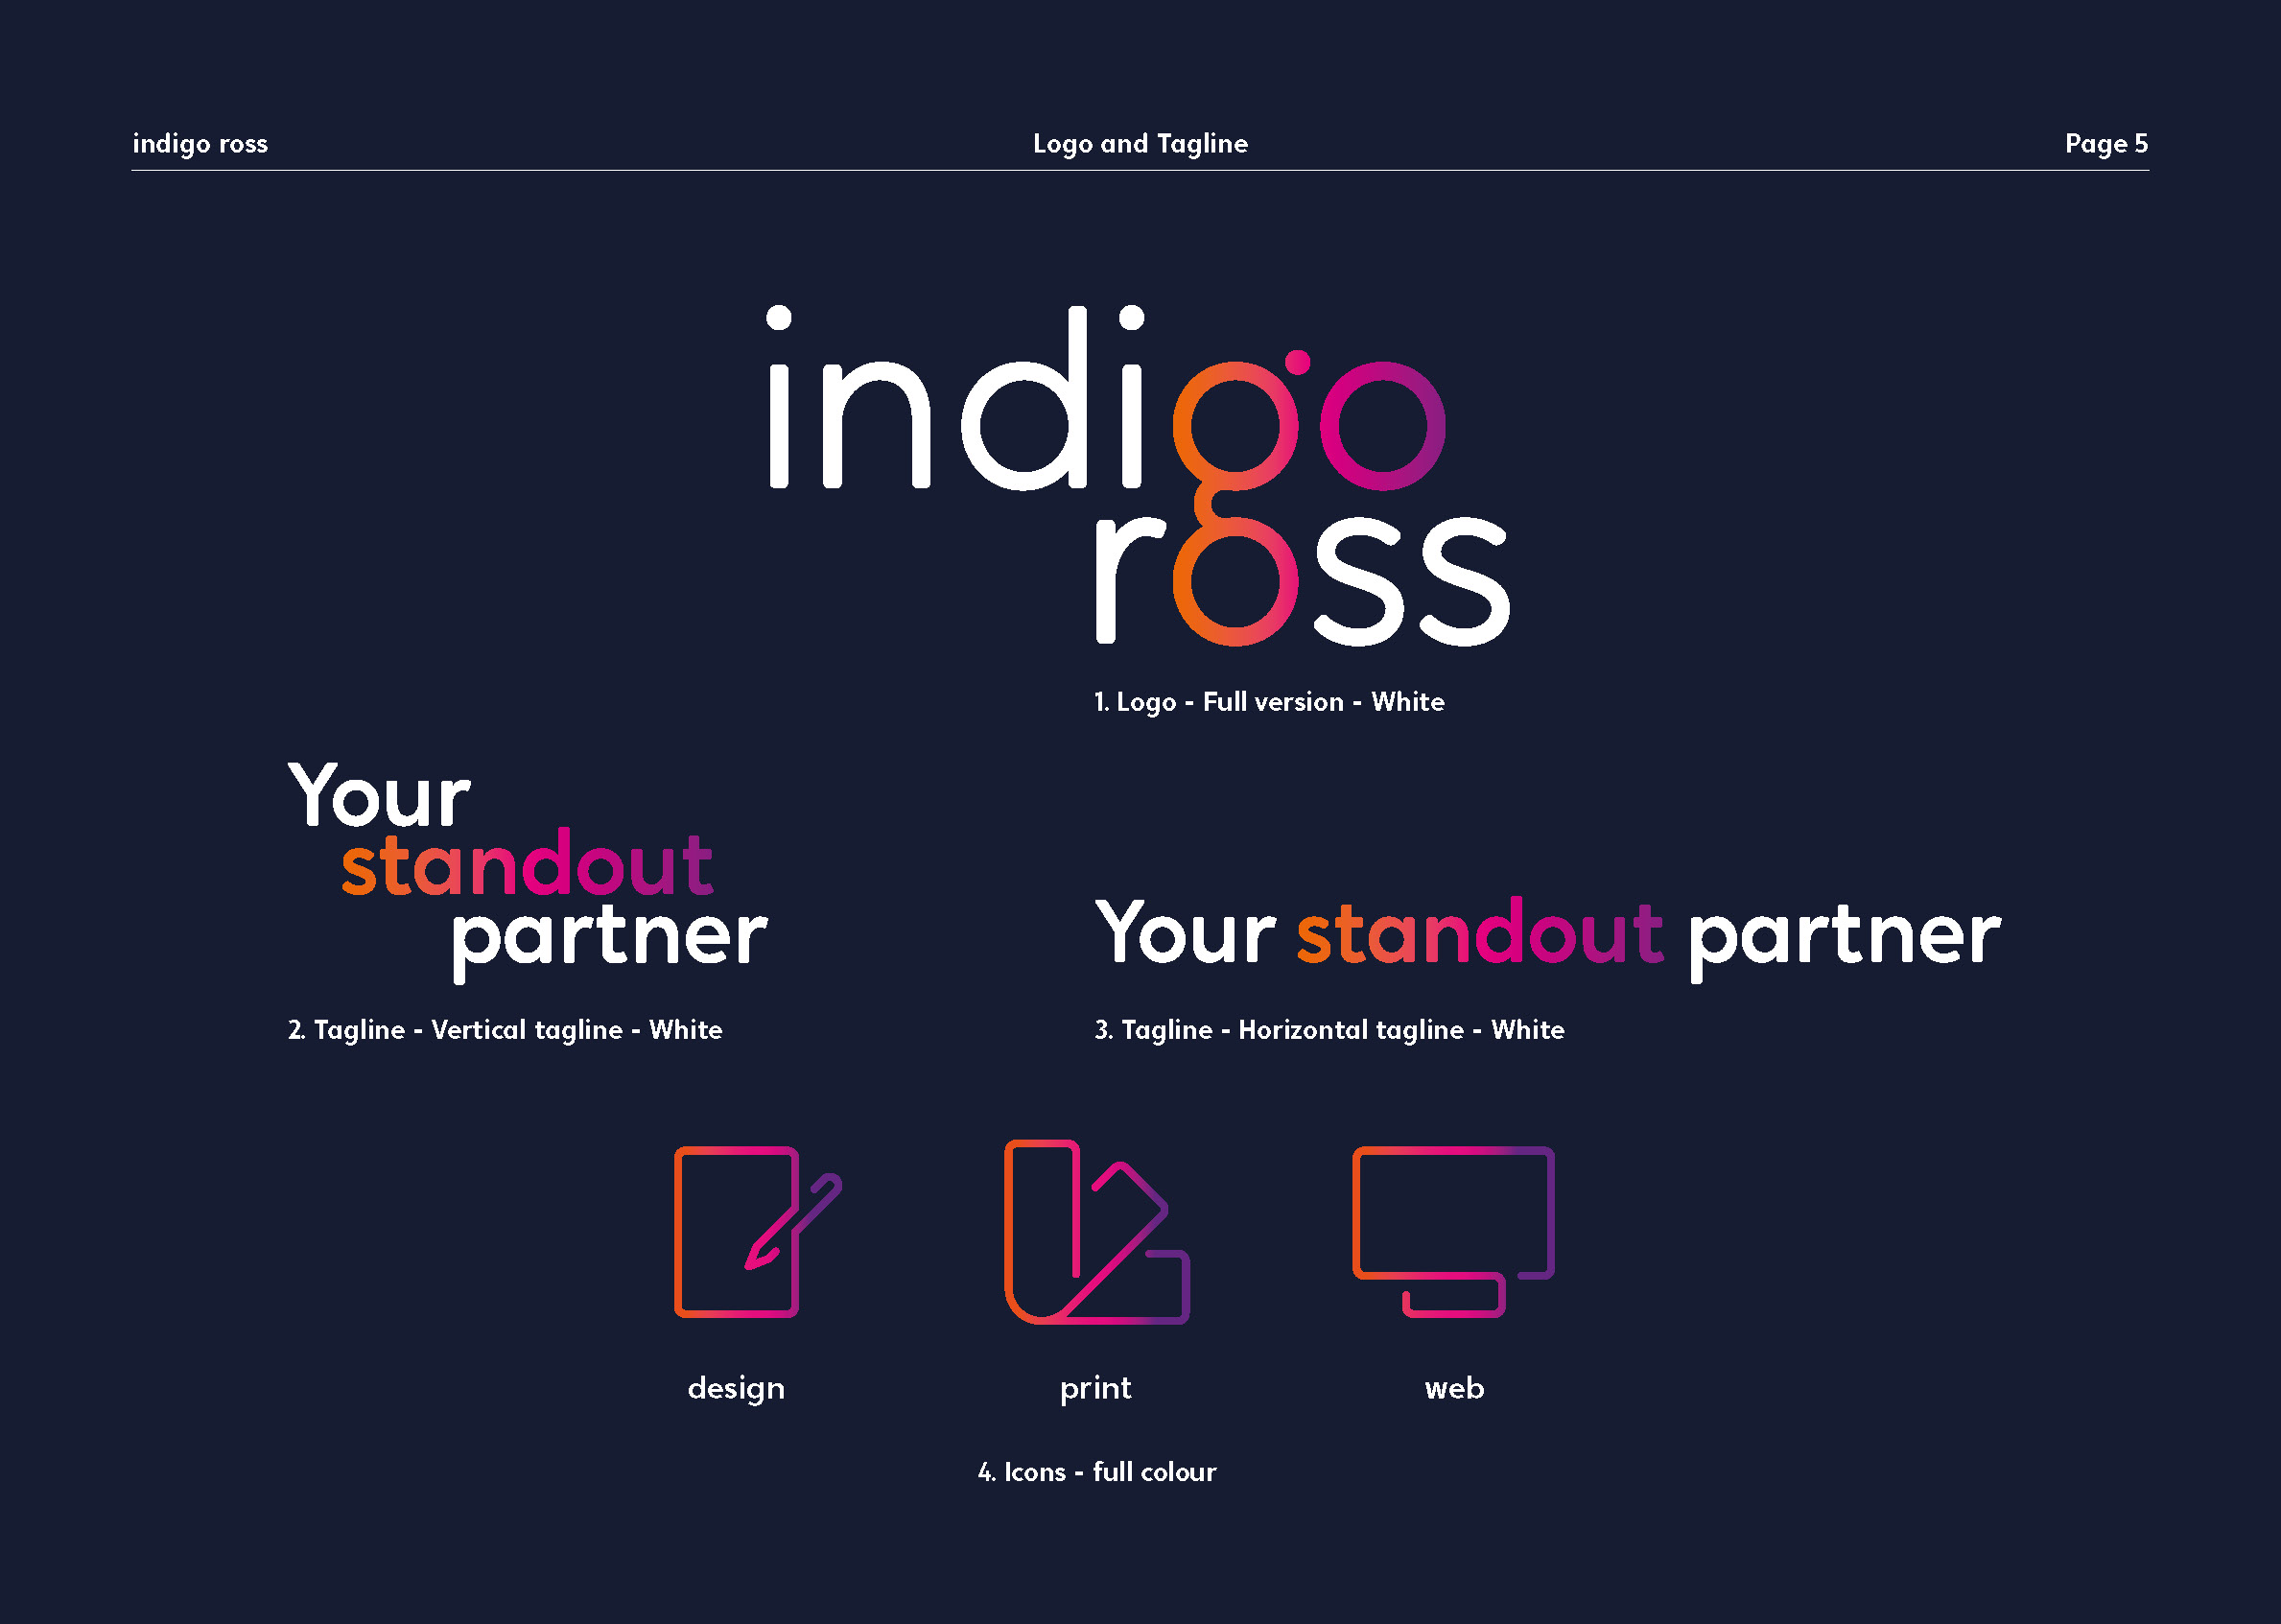 Indigo Ross Brand Guidelines - Logo and Tagline